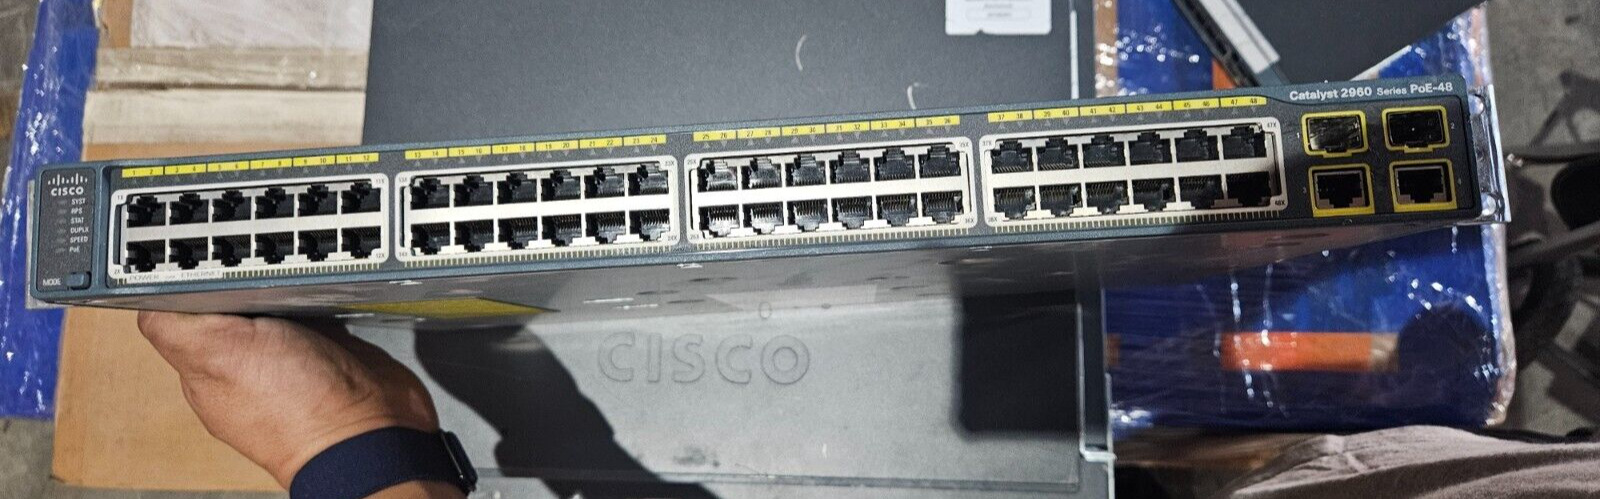 Cisco WS-C2960-48PST-L 48 Port Ethernet Switch - Black